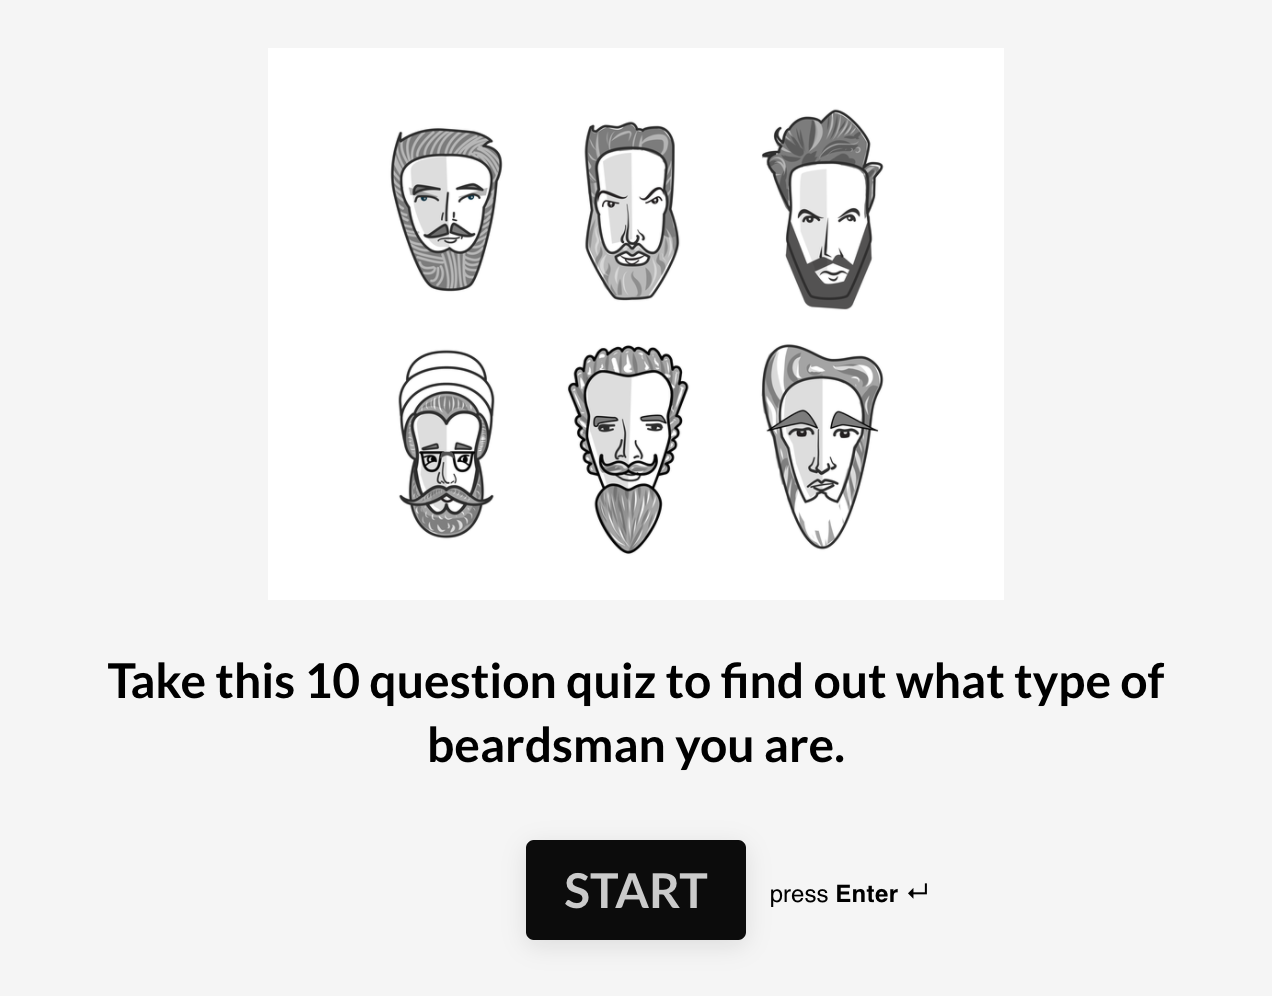 A Typeform quiz from Beardbrand